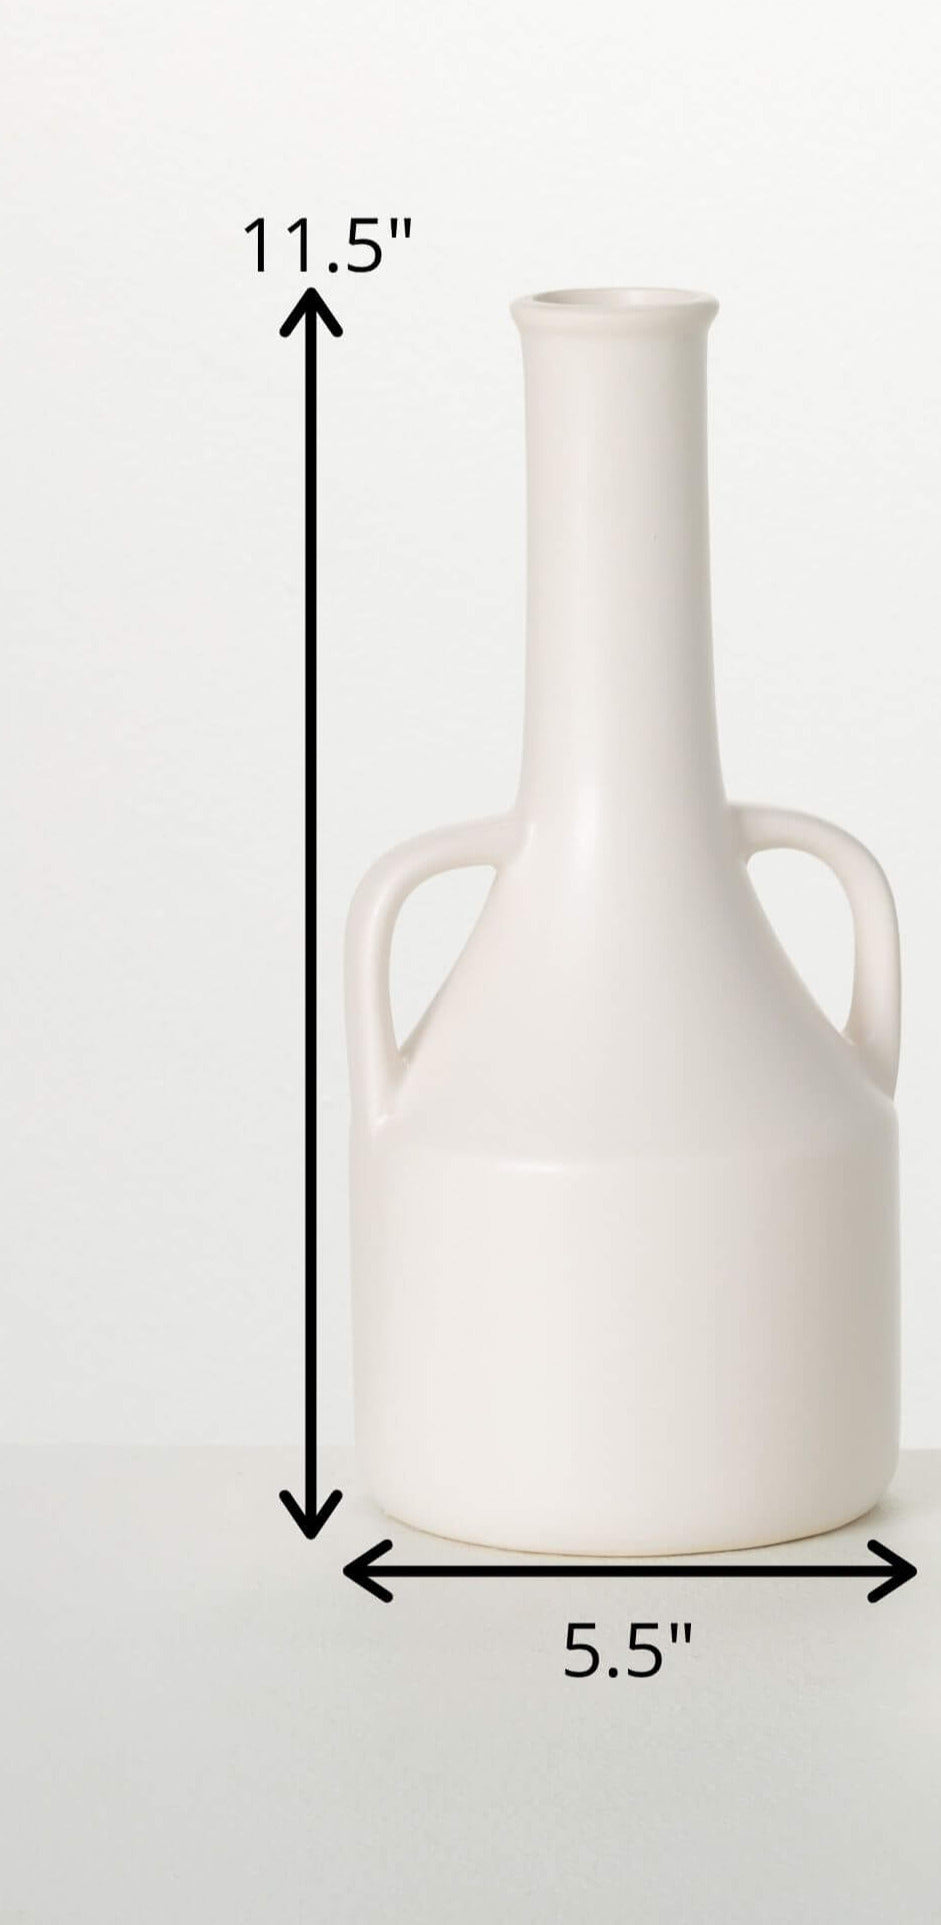 Modern White Handled Jug Vase (Two Style Options)